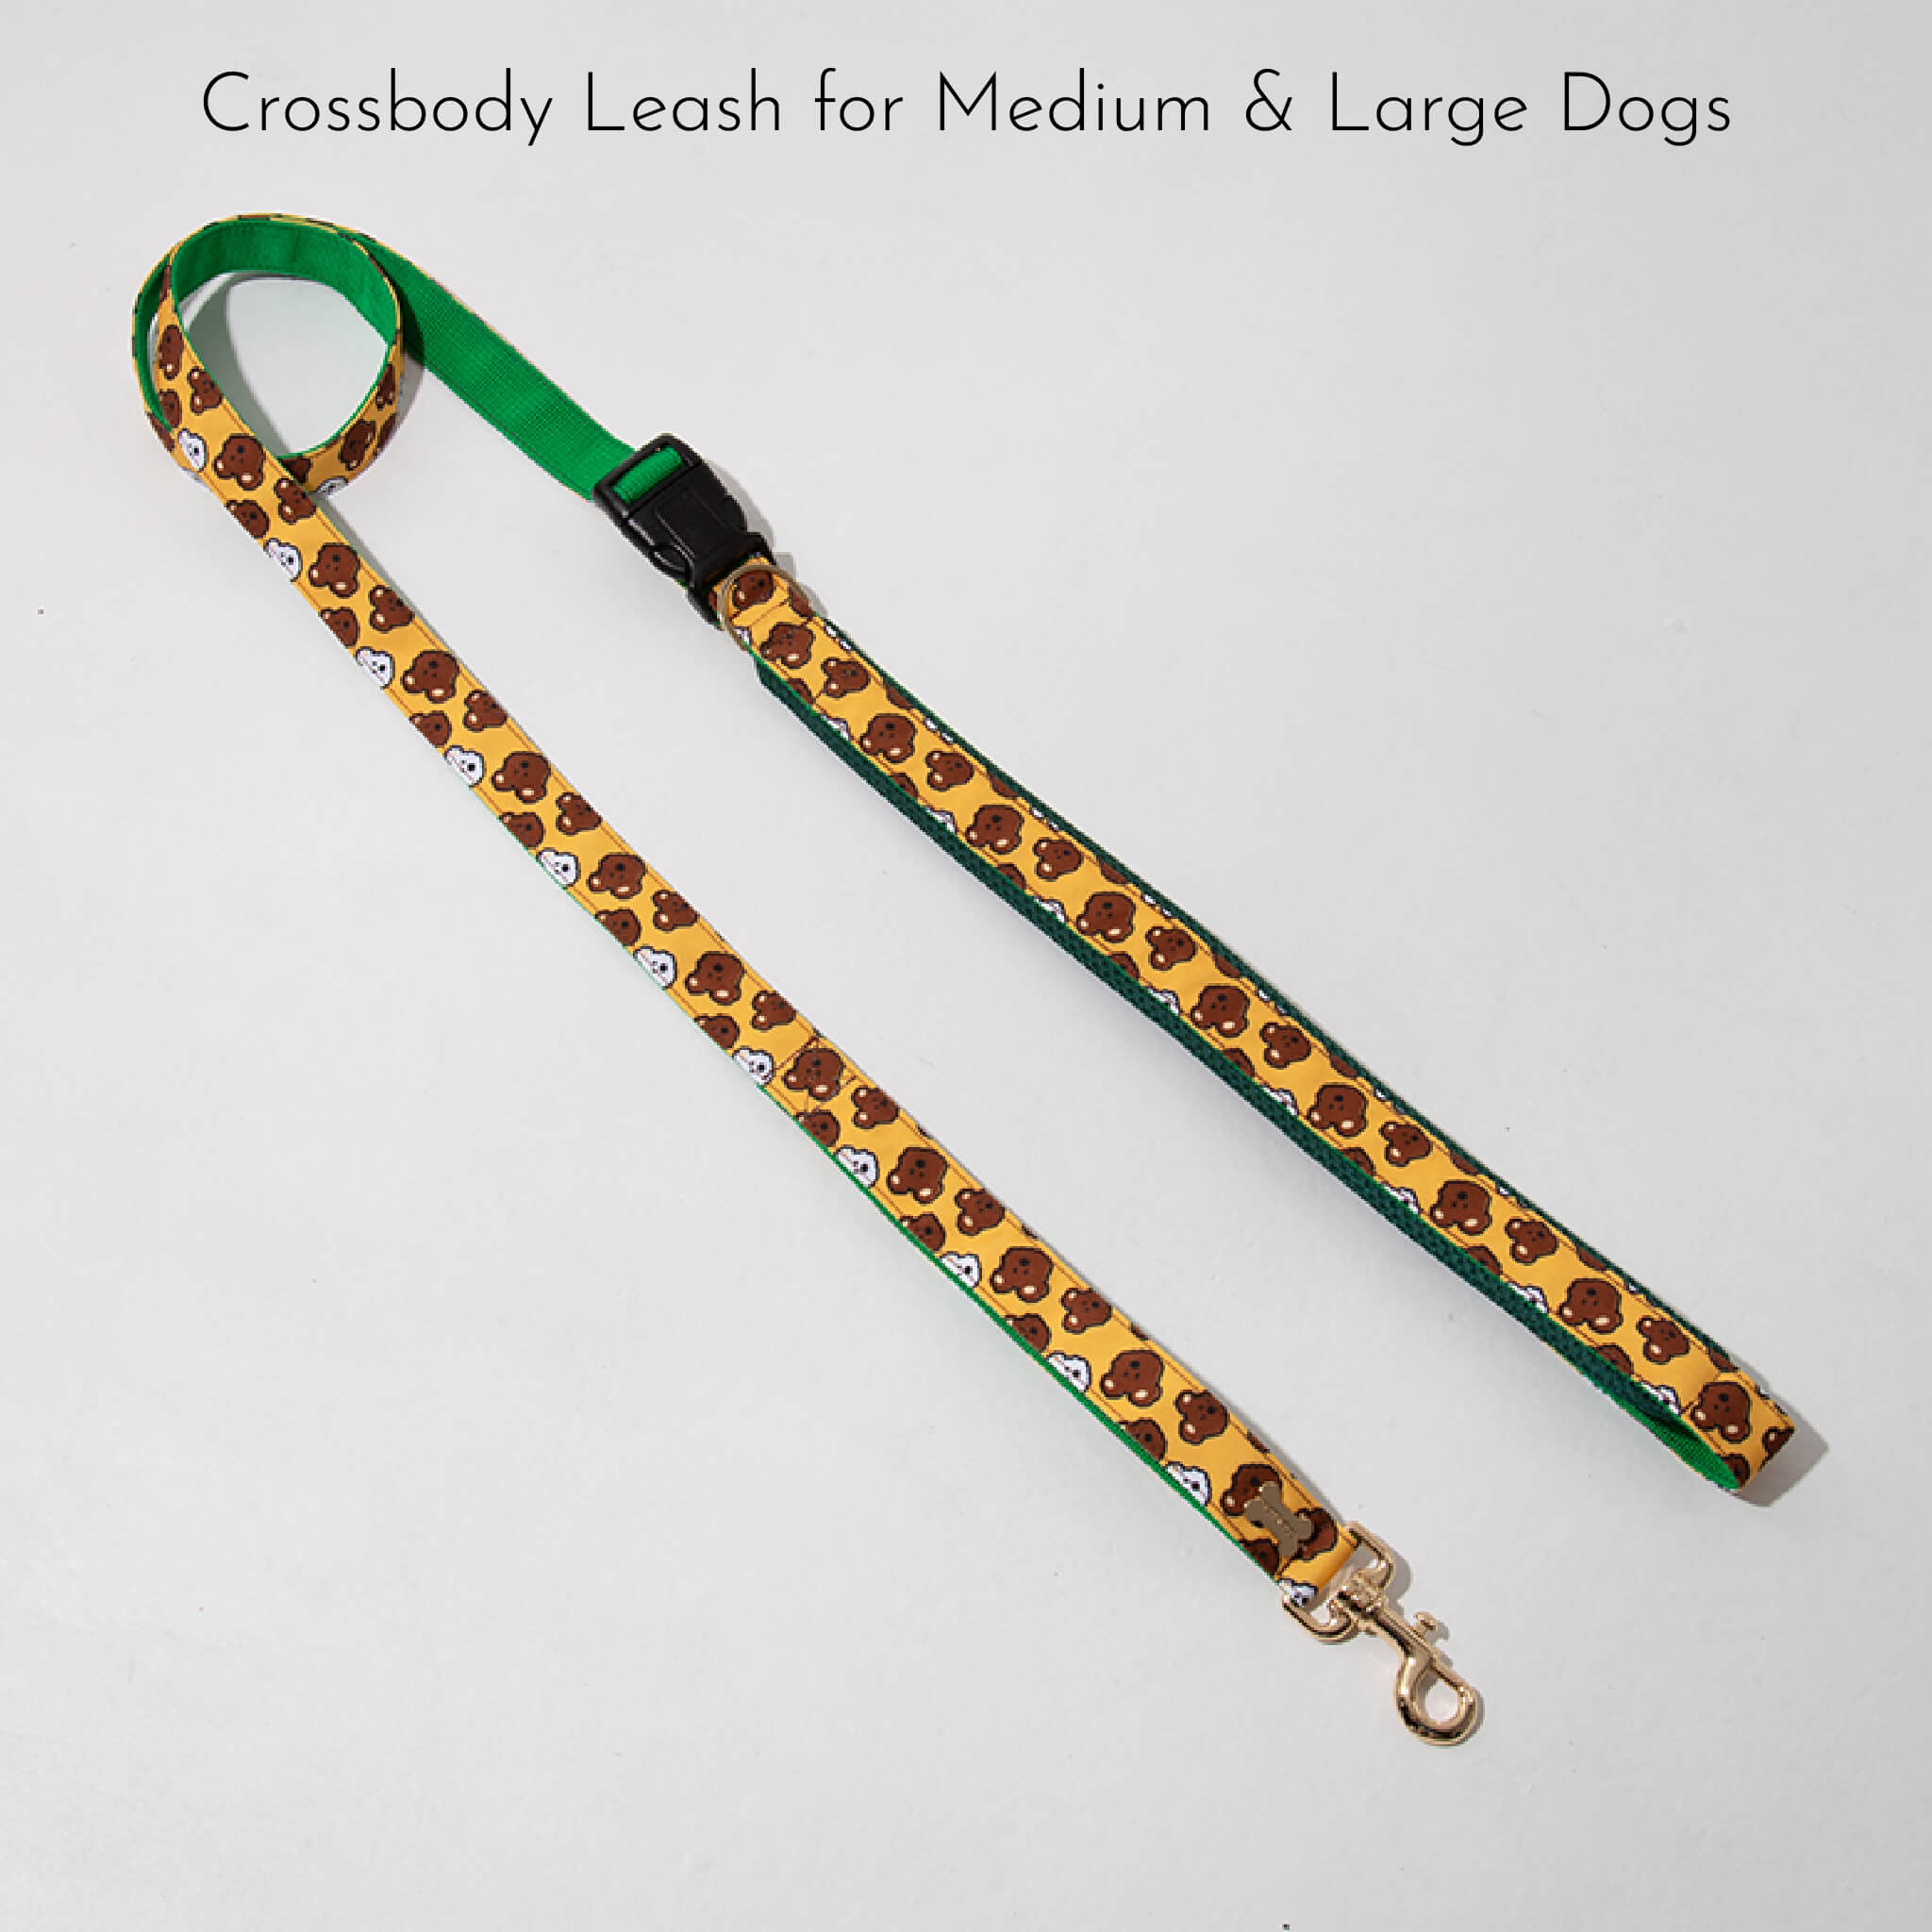 crossbody leash for medium & large dogs